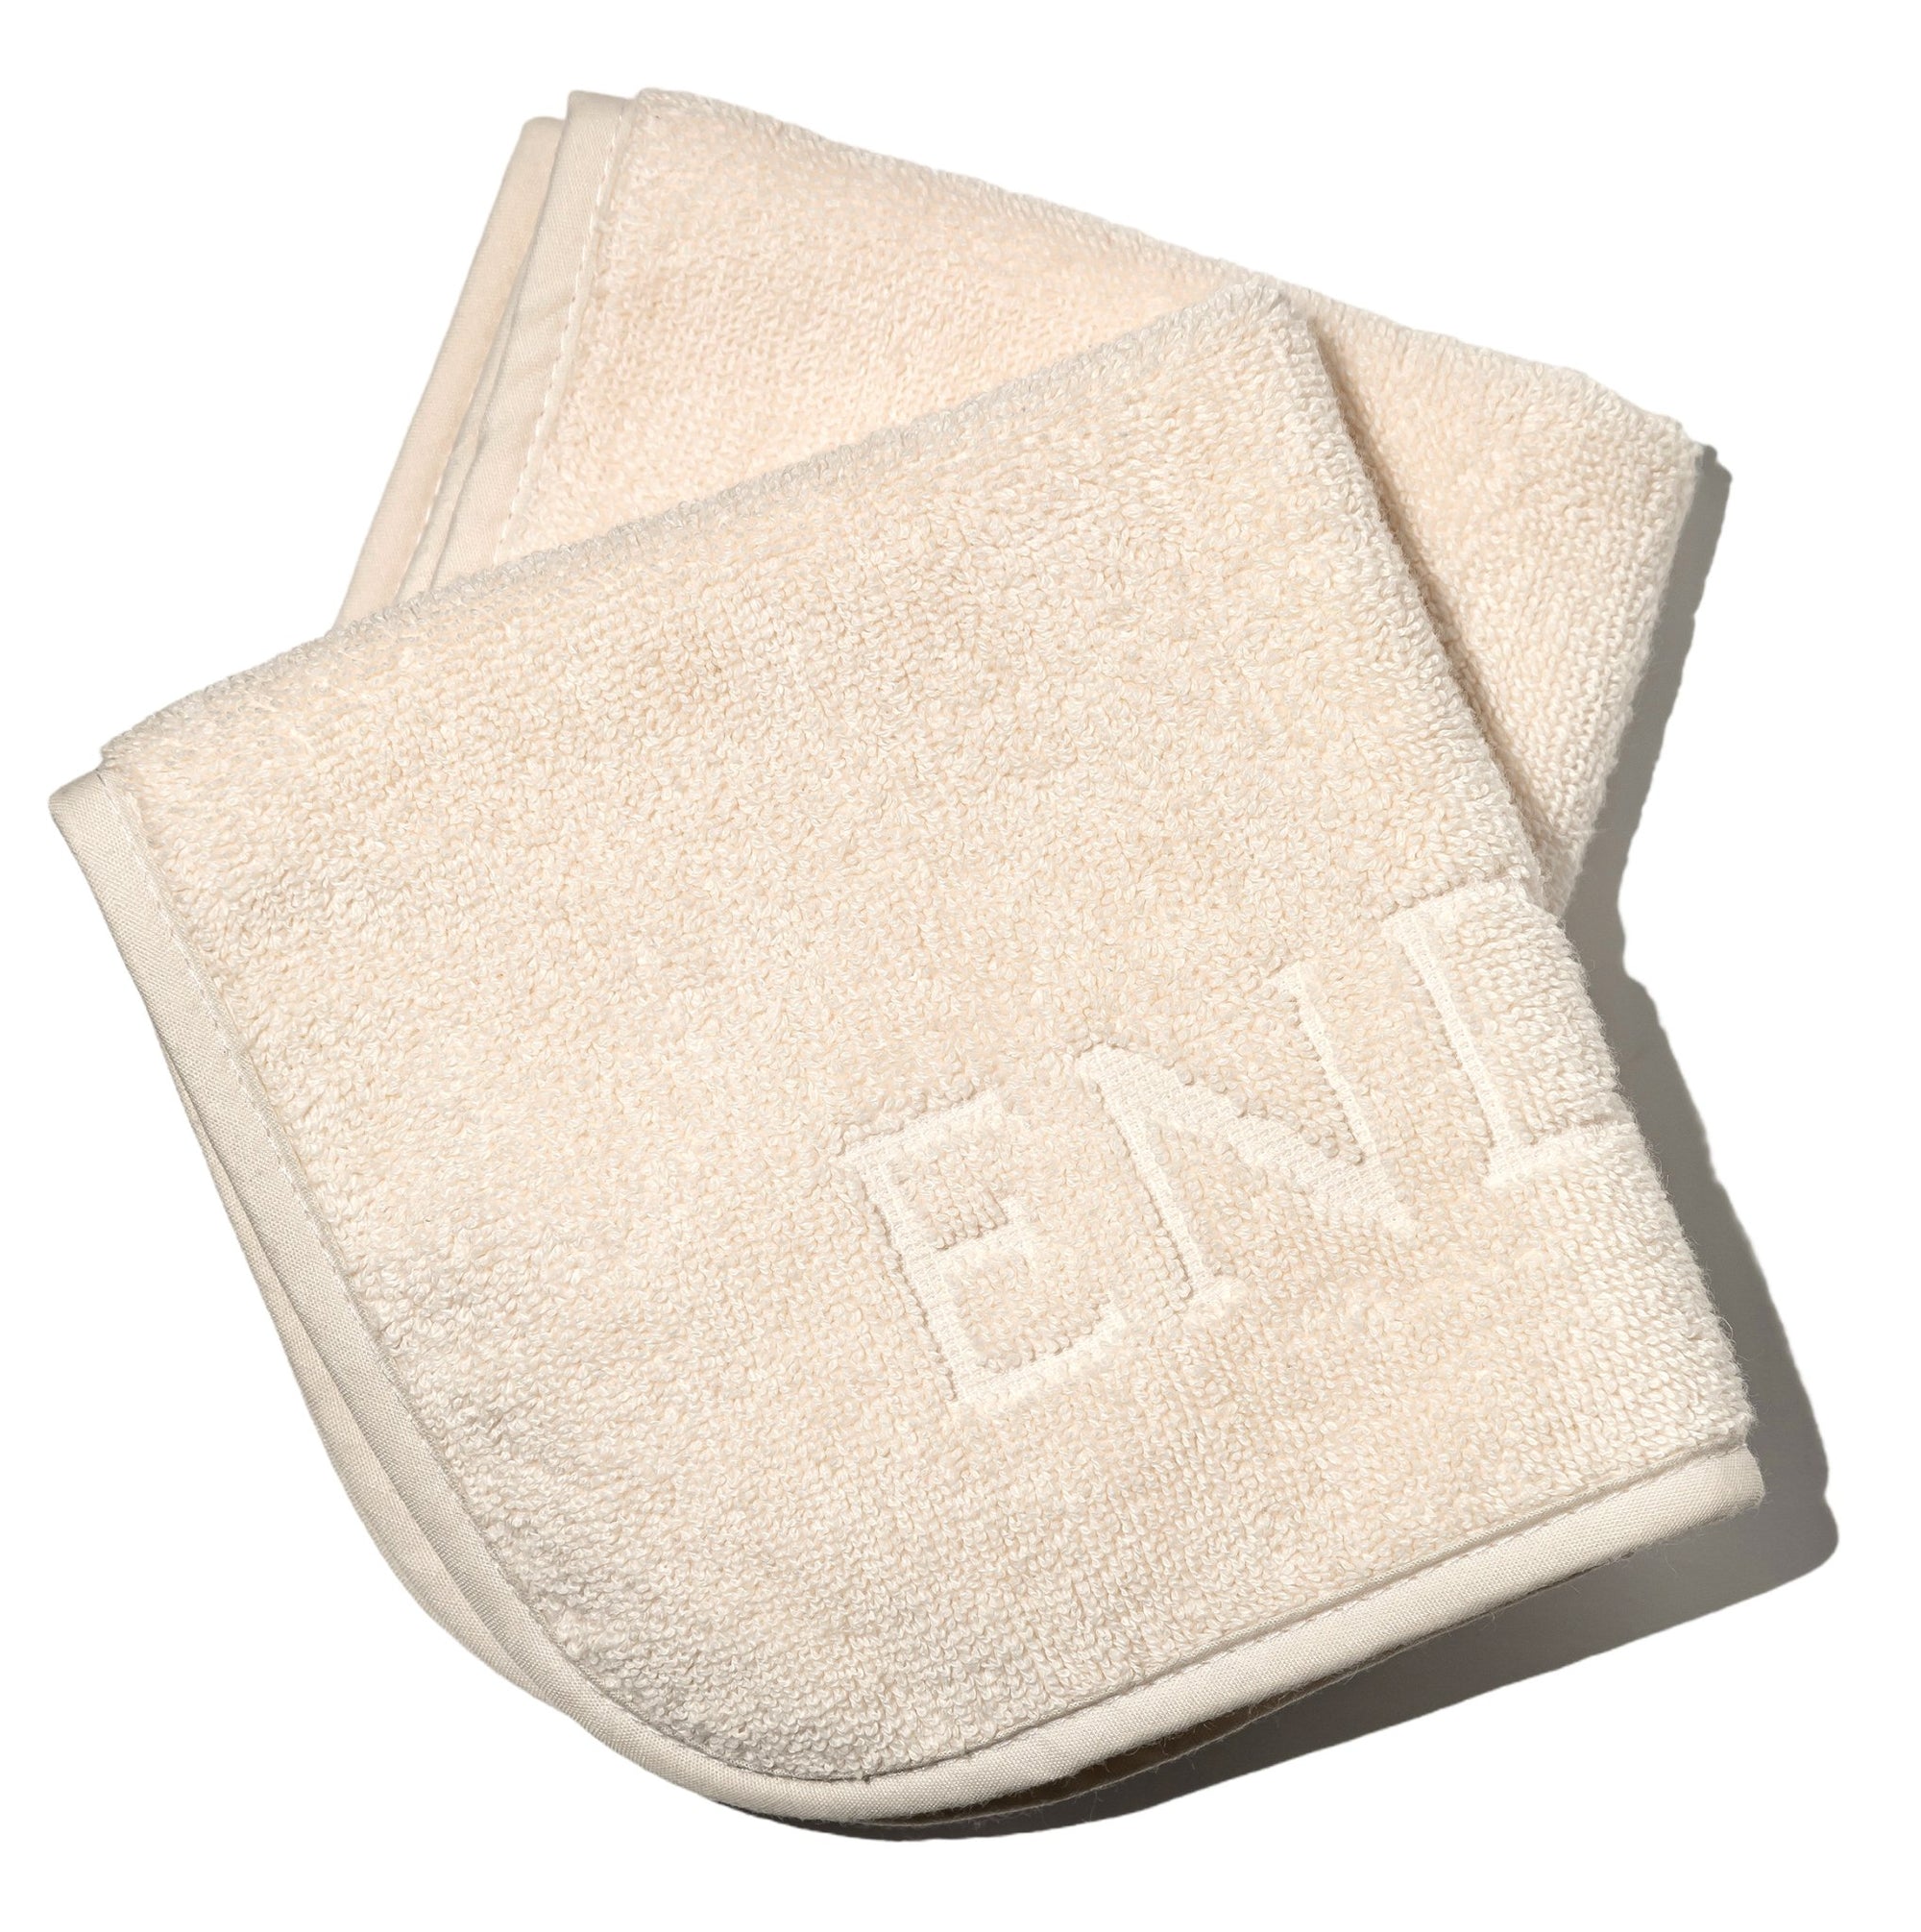 A Touch of Heaven Face Towel (set of 2) - Endiva100% Cotton Face Towel